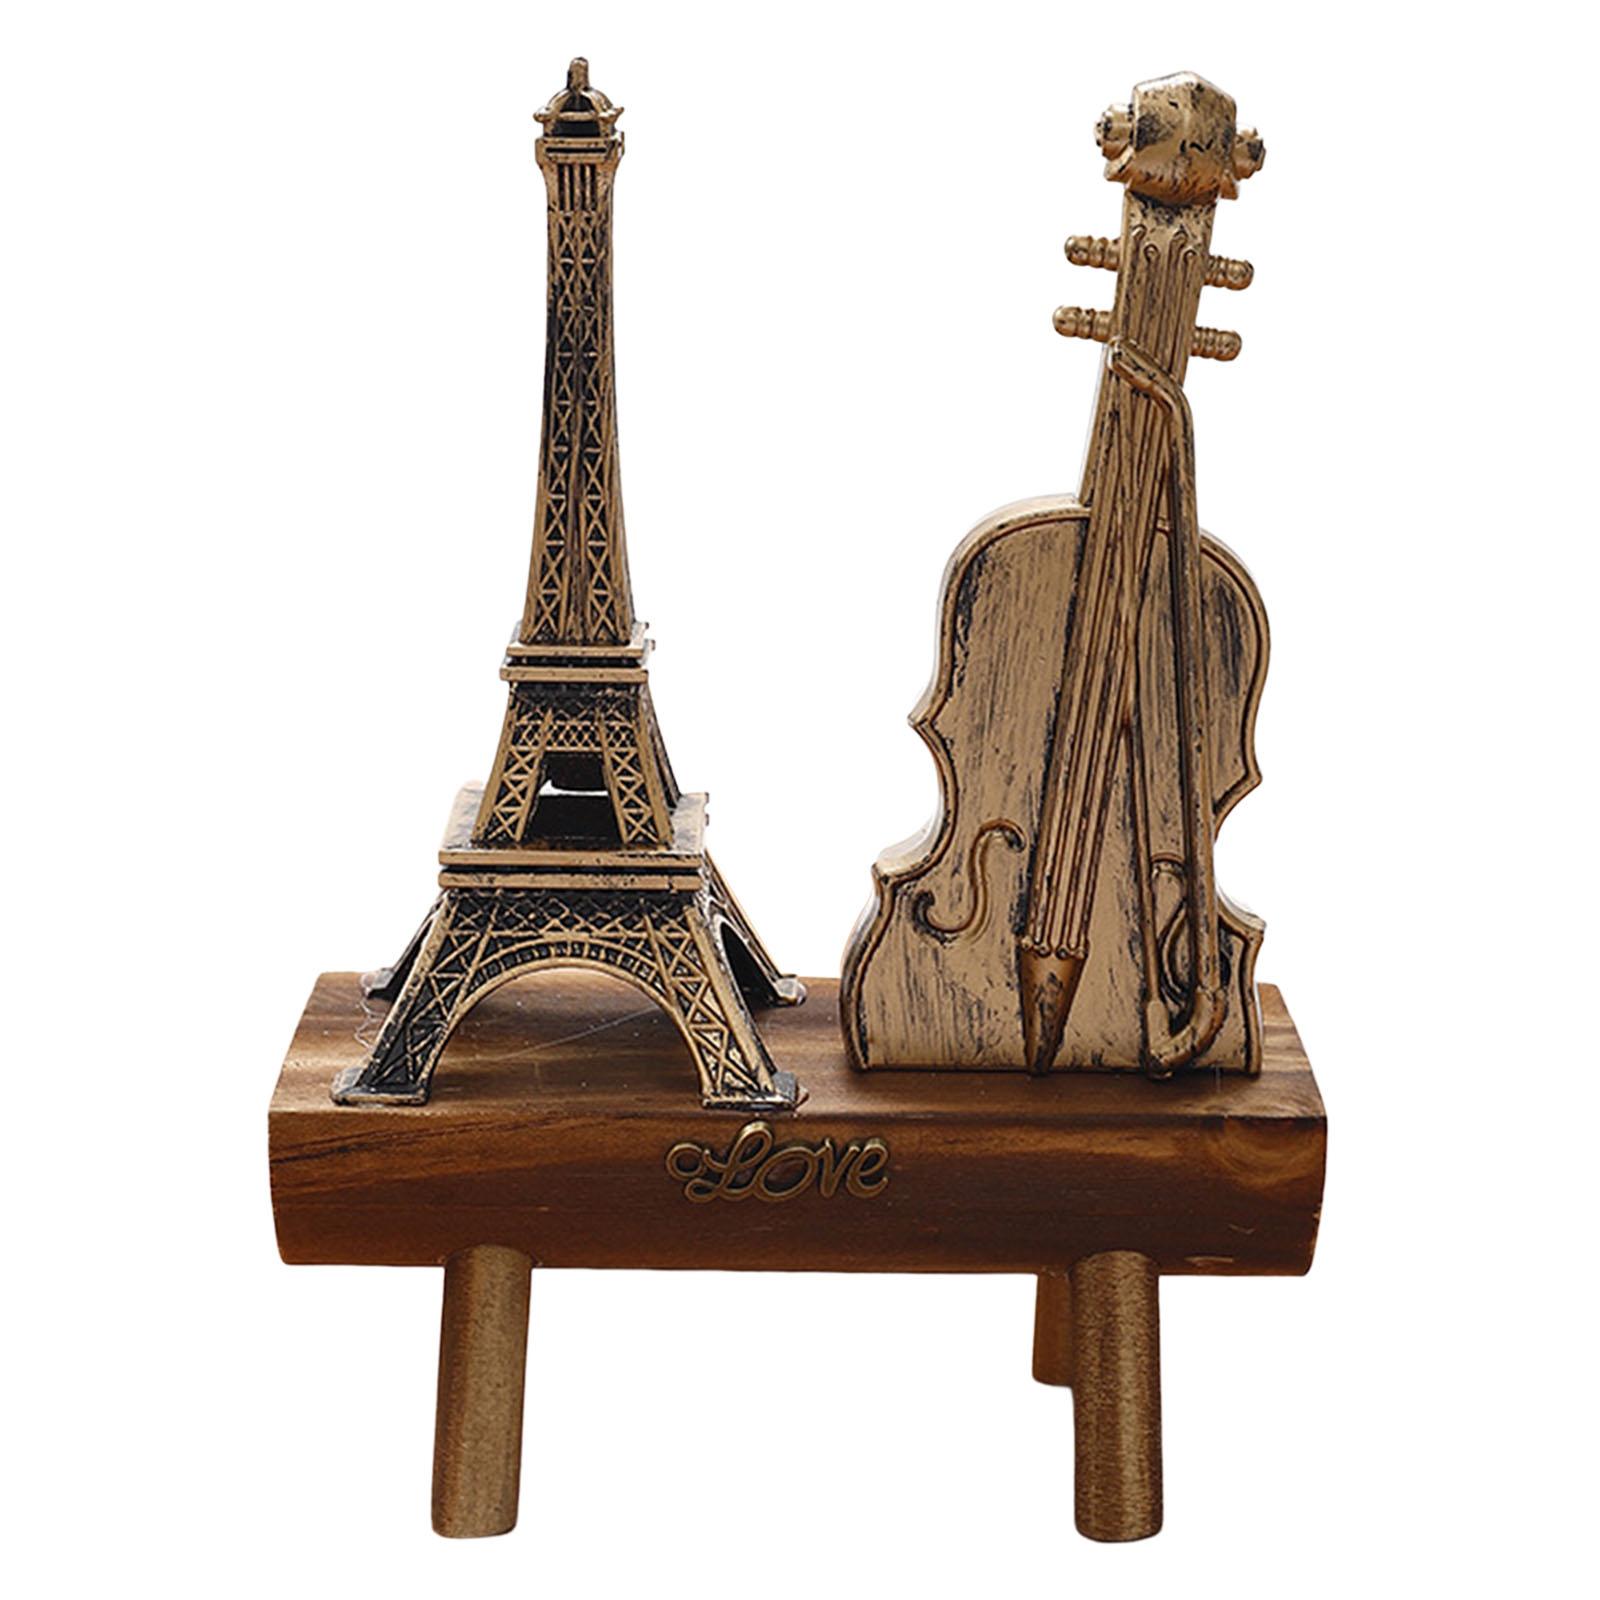 Miniature Wooden Model Crafts Ornament Kids Gift for Desktop Home Decor Tower